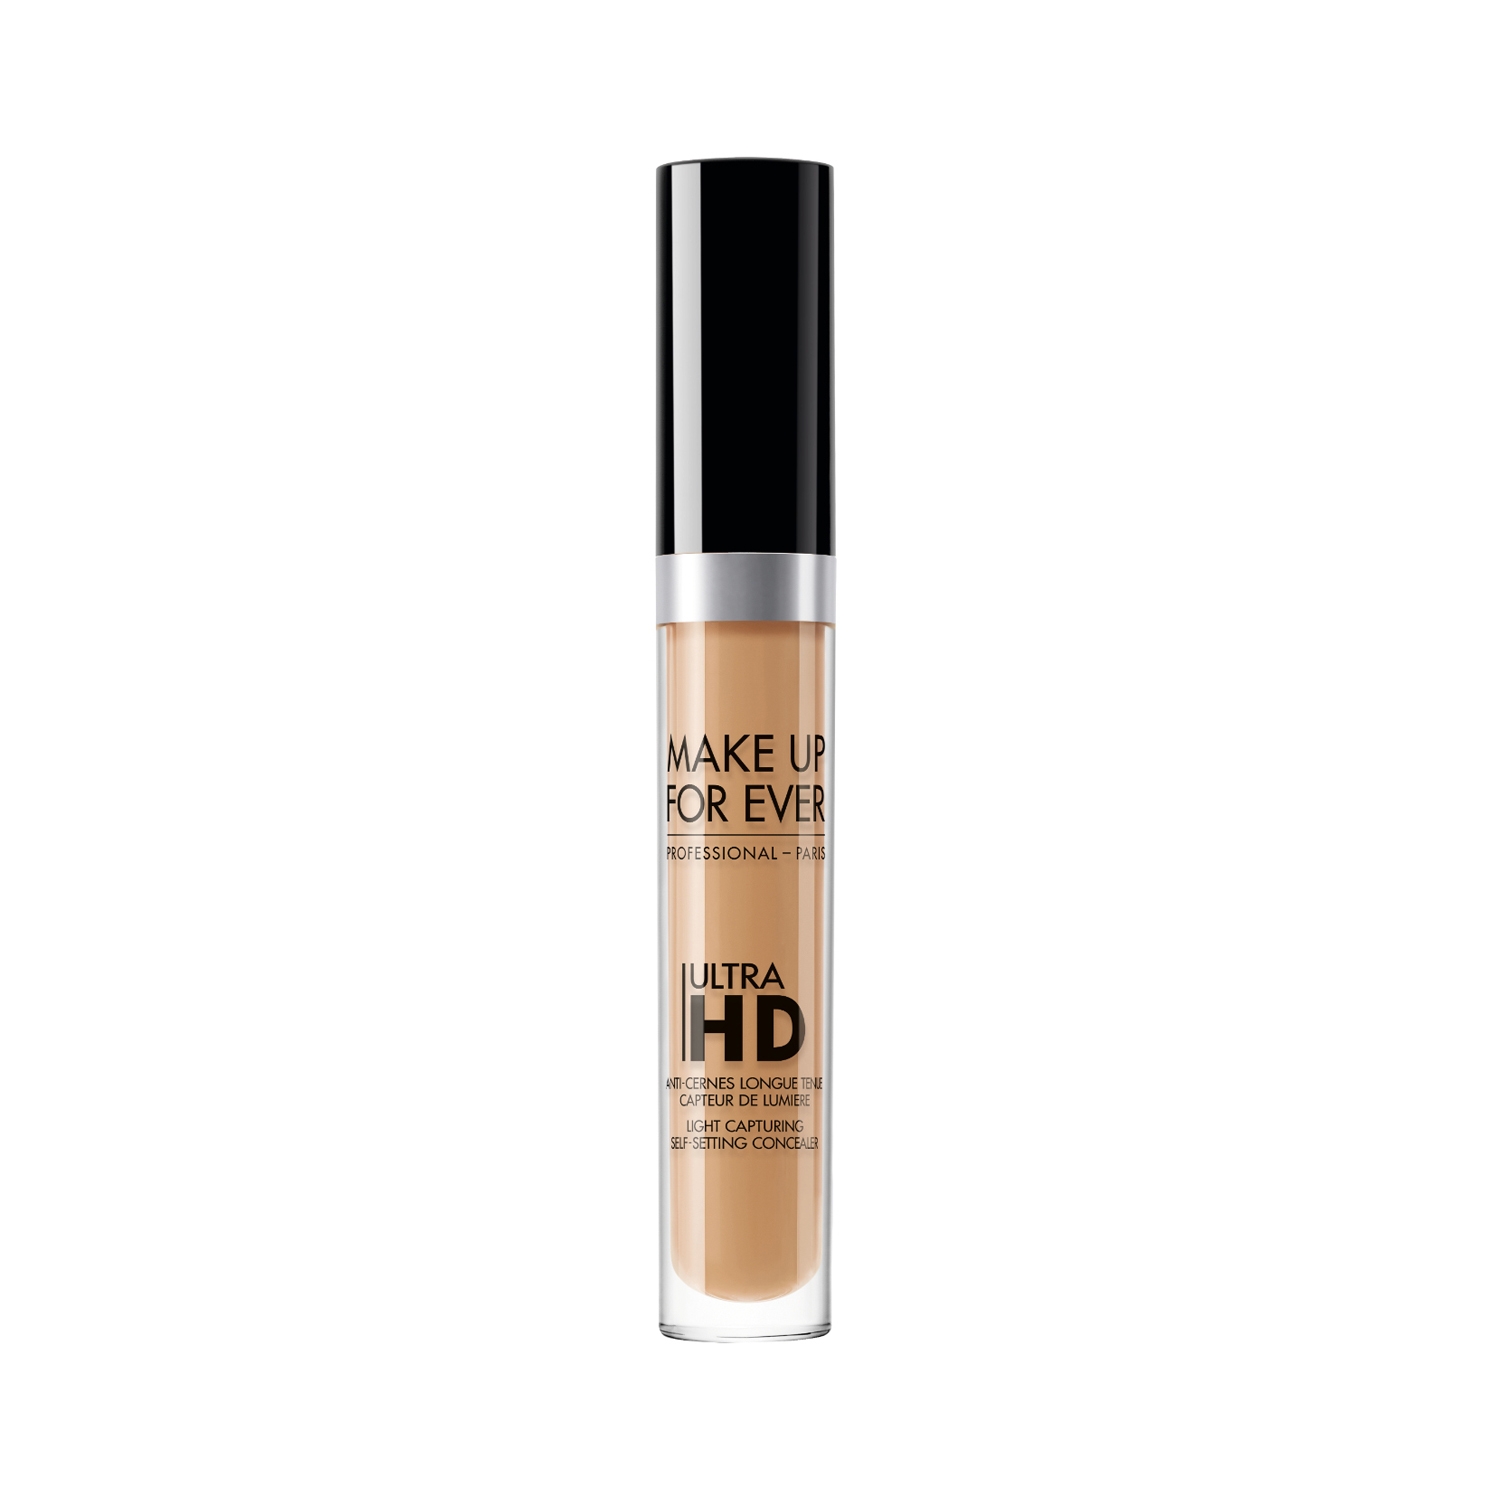 Make Up For Ever | Make Up For Ever Ultra HD Concealer Invisible Cover Concealer - 34 Golden Sand (5ml)